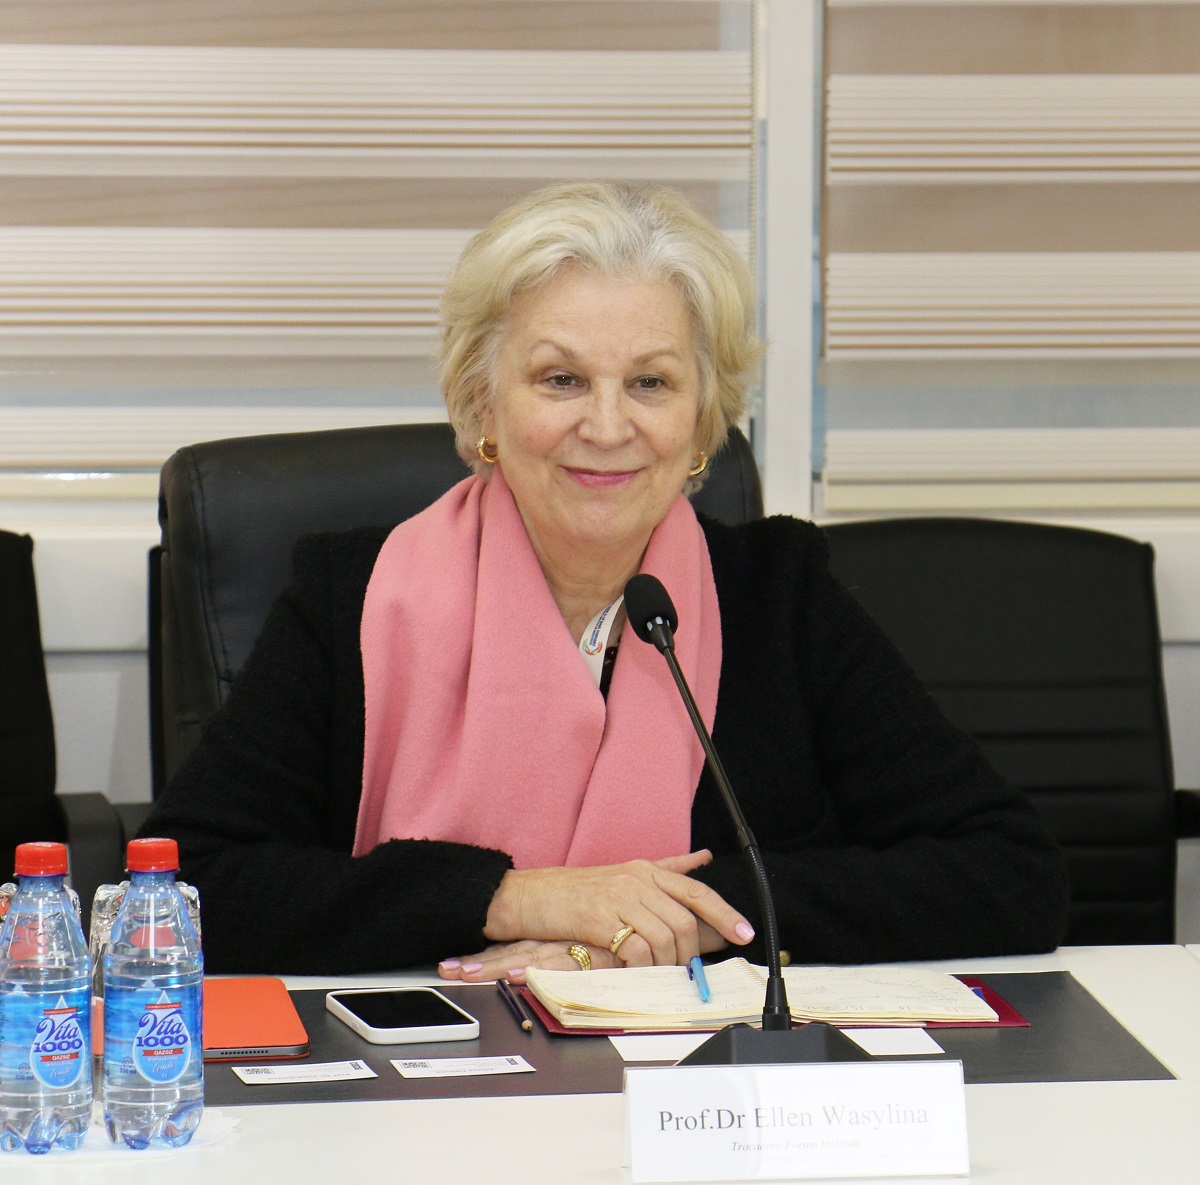 Vusal Gasimli met with the head of the Trocadero Forum Institute